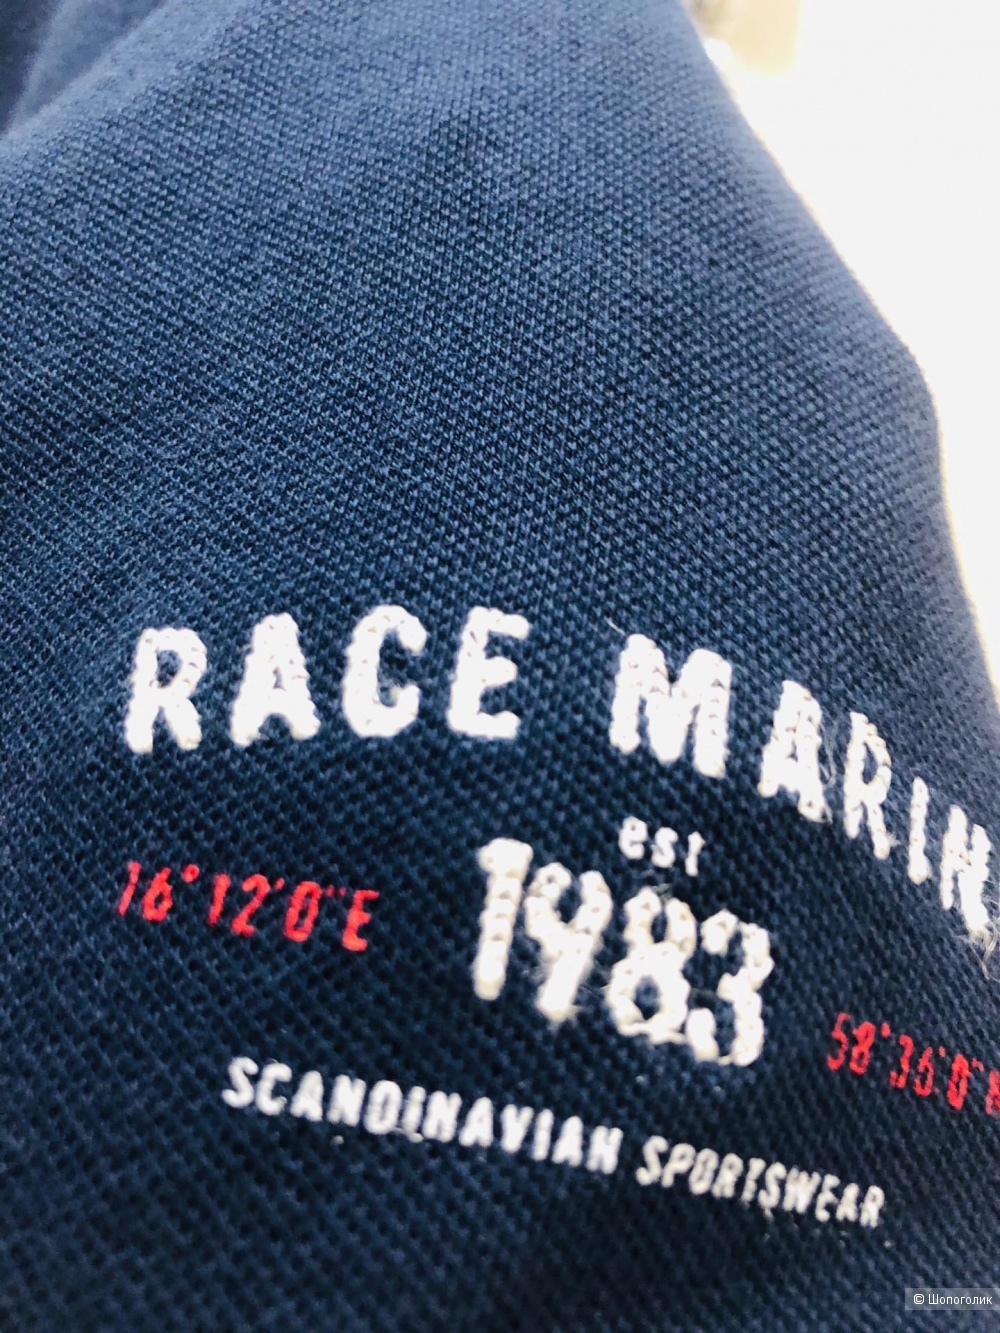 Платье Race Marine.Размер 46-48.